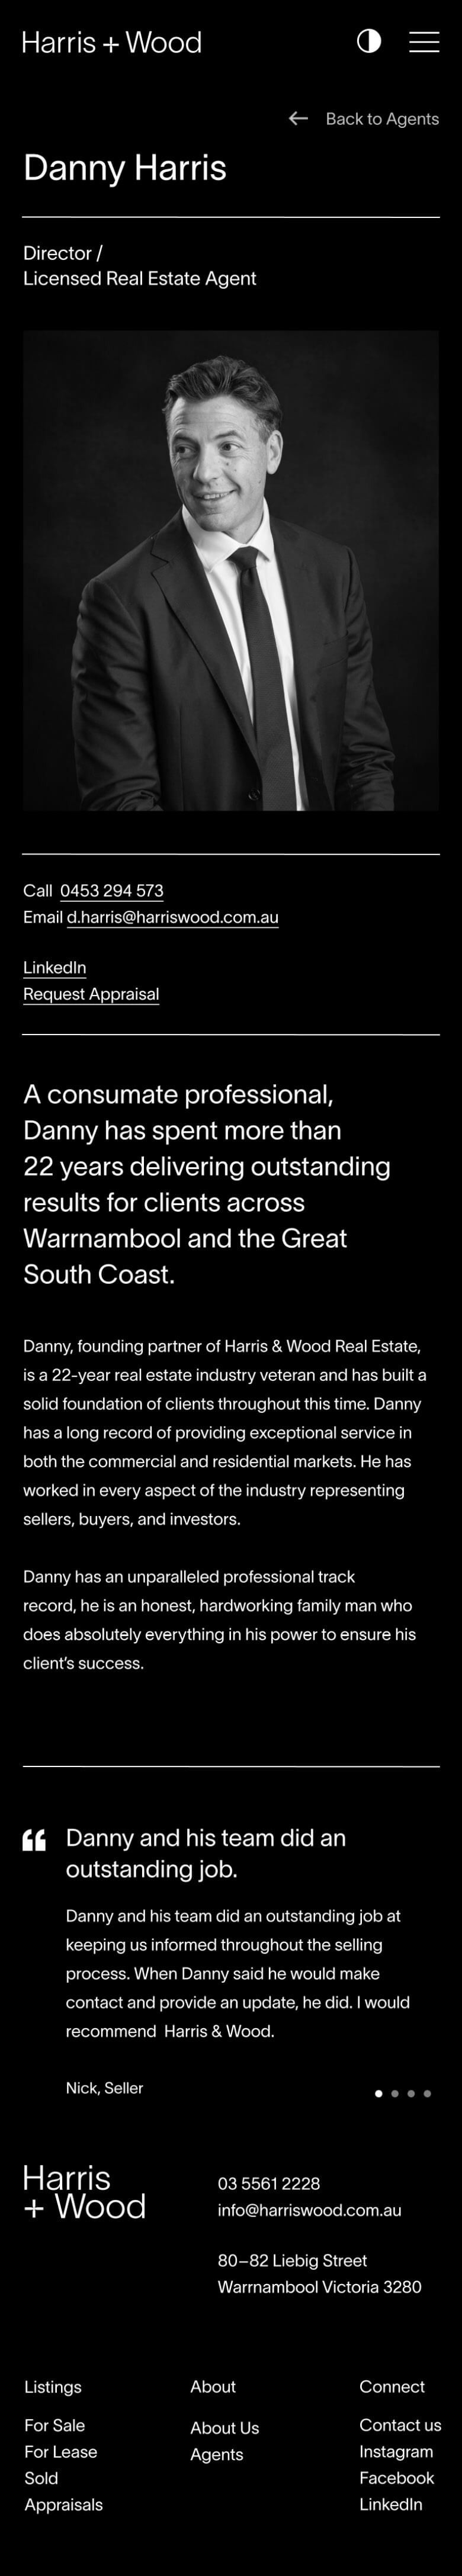 Harris Wood Real Estate - Brand and Website - Digital UX | Atollon - a design company